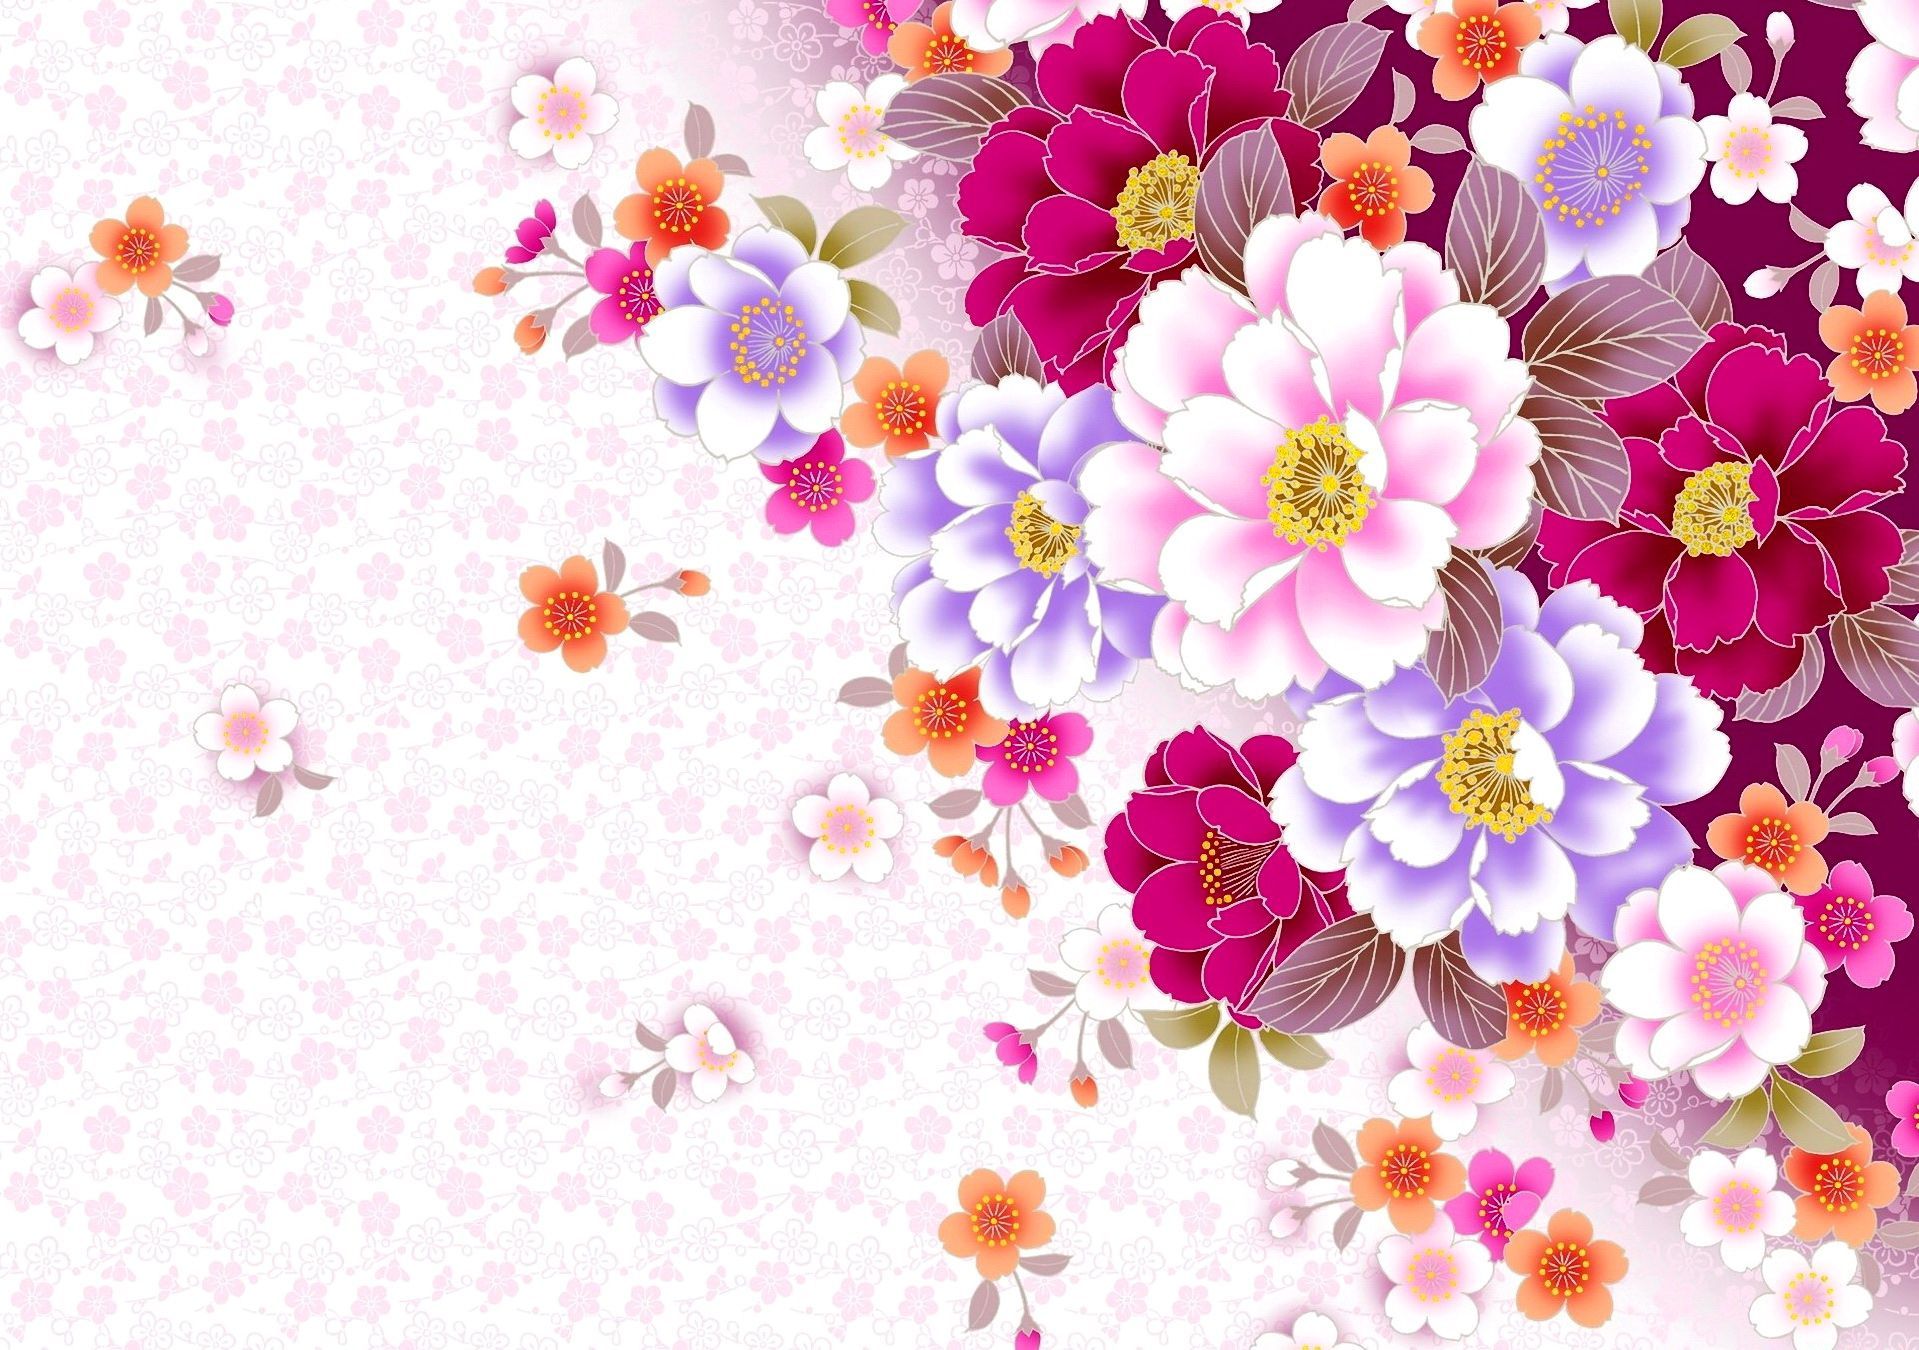 Great Pink Flower Wallpaper Laptop/phone Backgrounds - High Resolution Wallpaper  Floral Background - 1919x1350 Wallpaper 